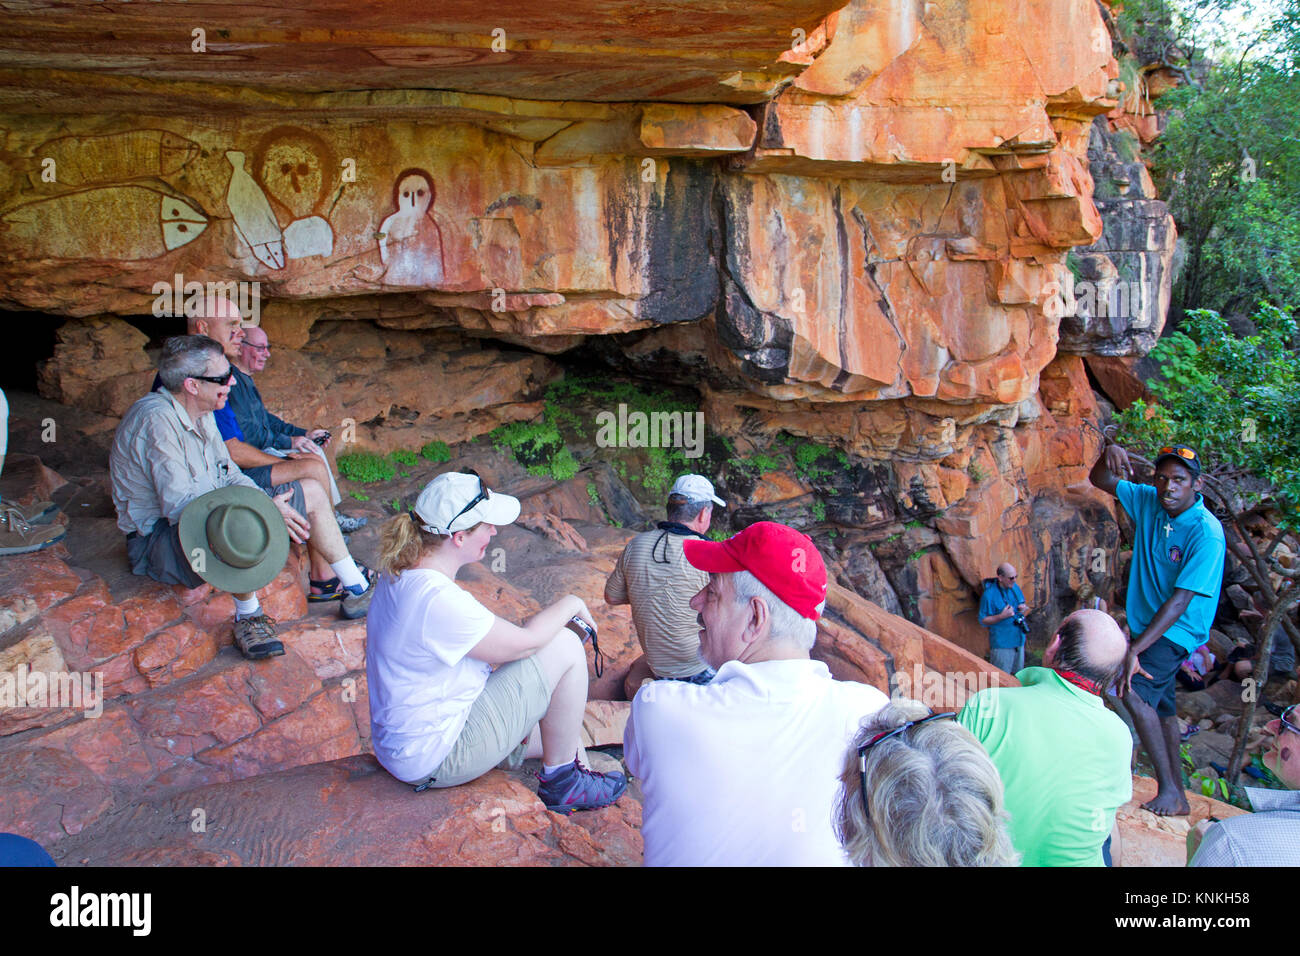 The Ngumbre Wandjina Aboriginal art site at Raft Point Stock Photo